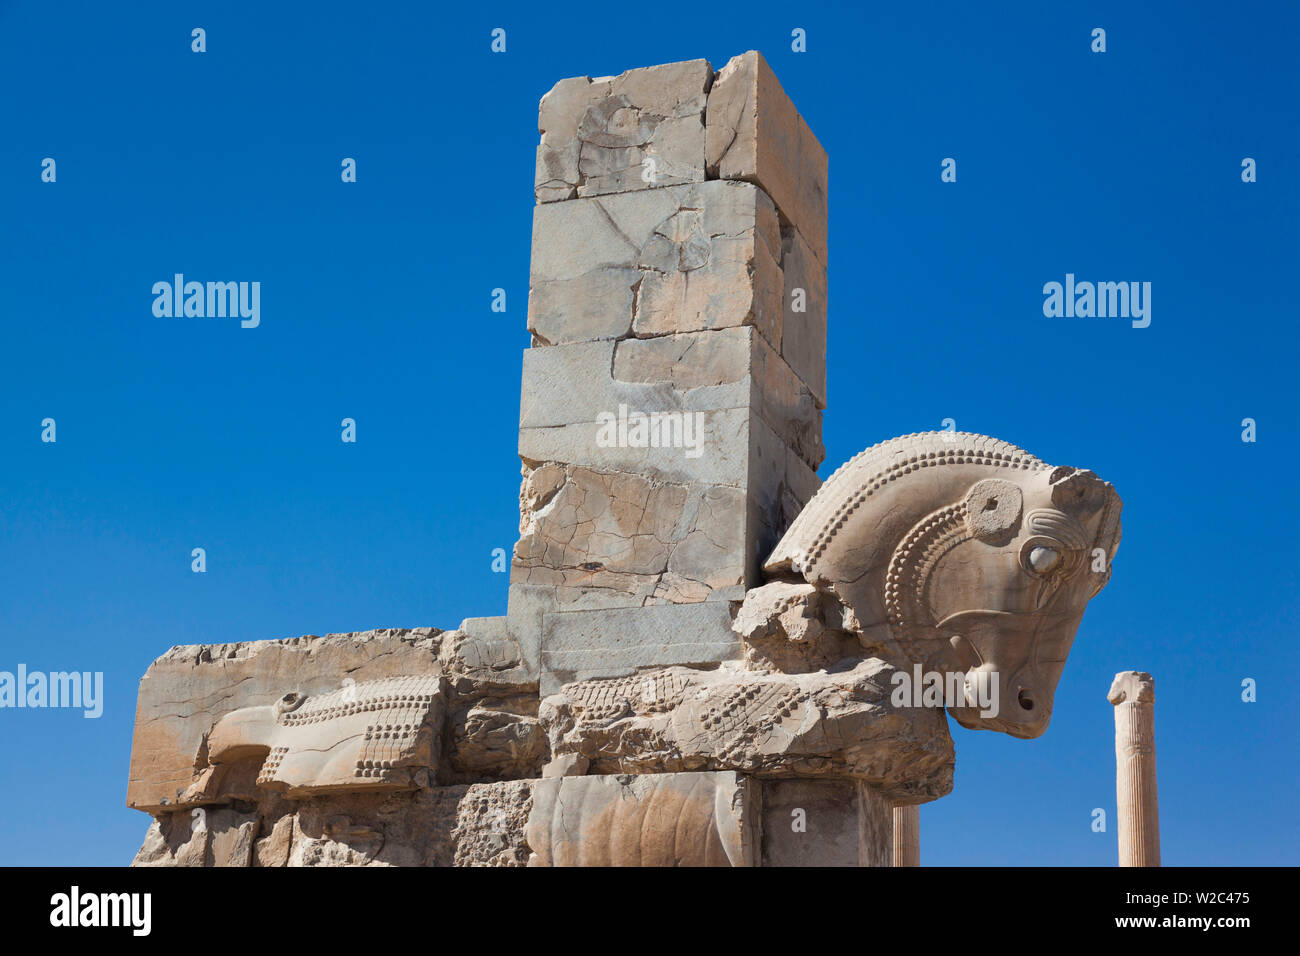 Iran, Central Iran, Persepolis, 6th century BC ancient city, horse monument Stock Photo